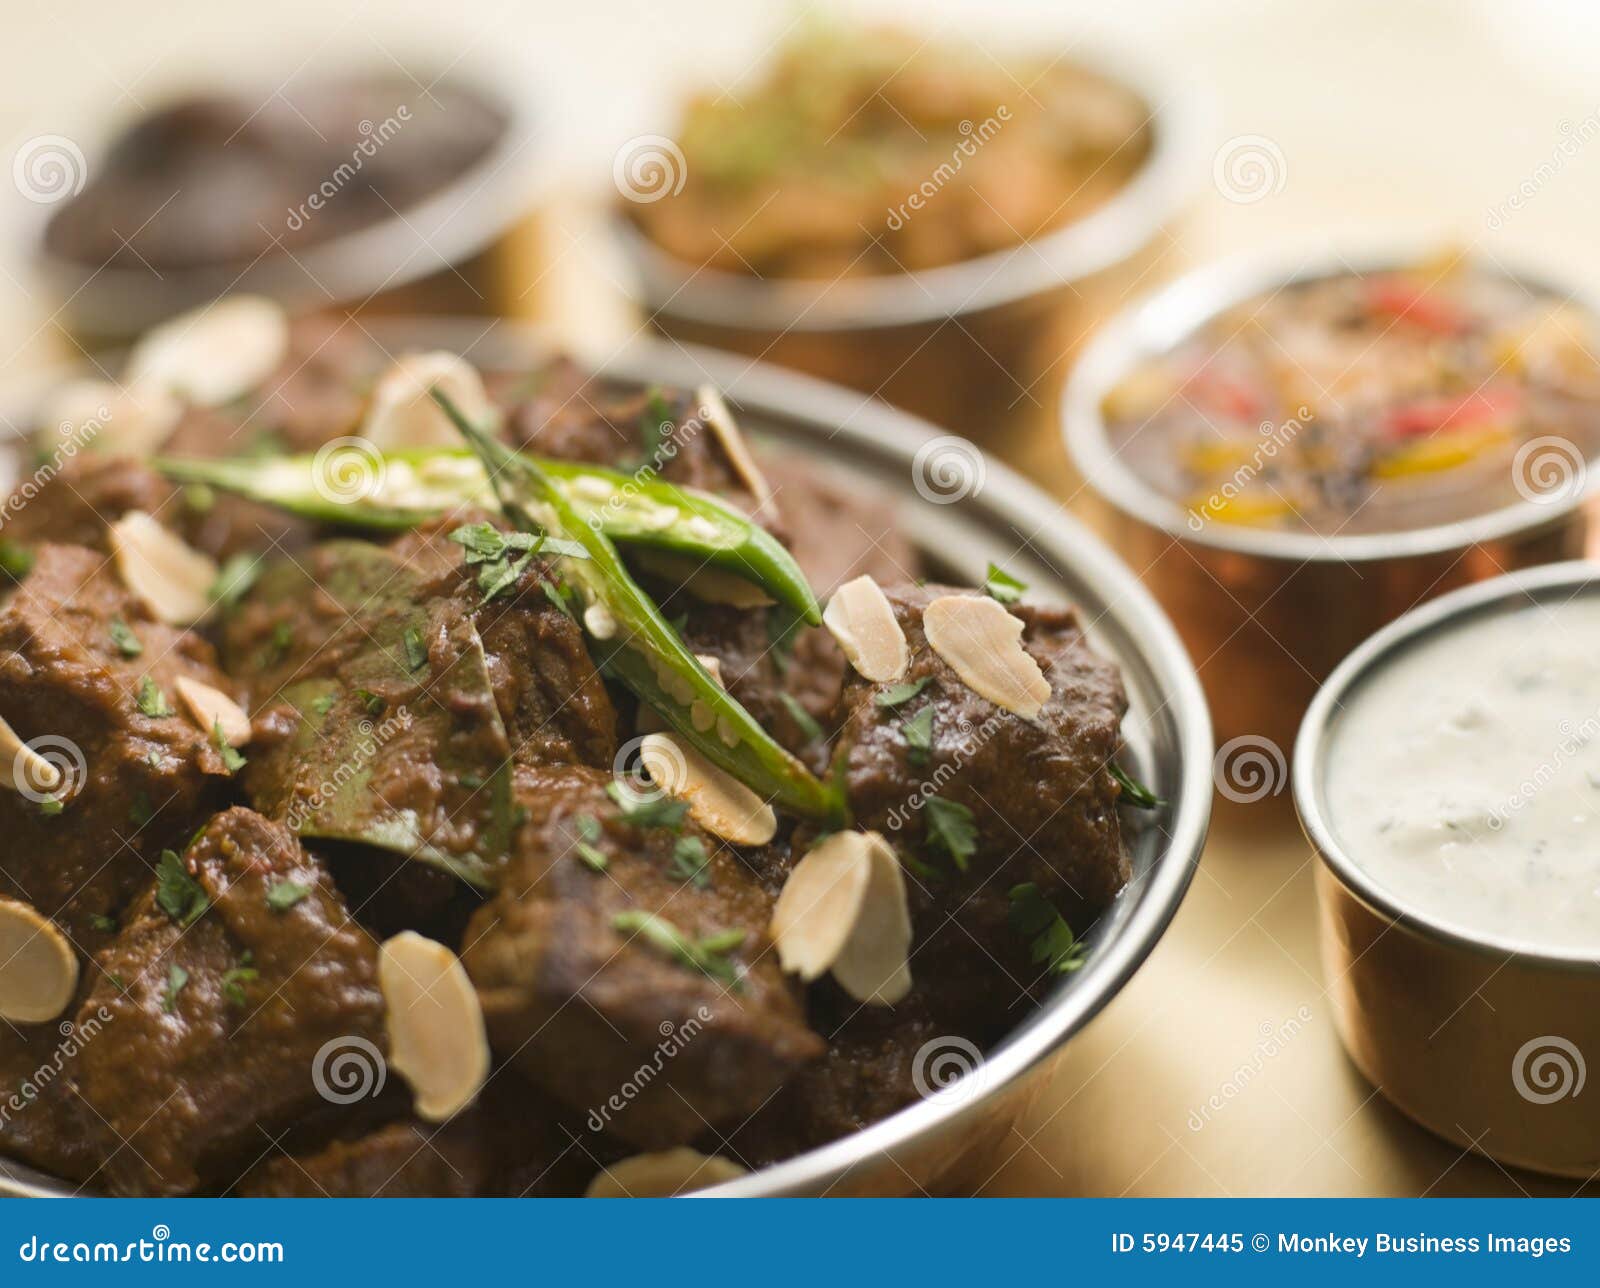 meat madras restaurant style and chutneys